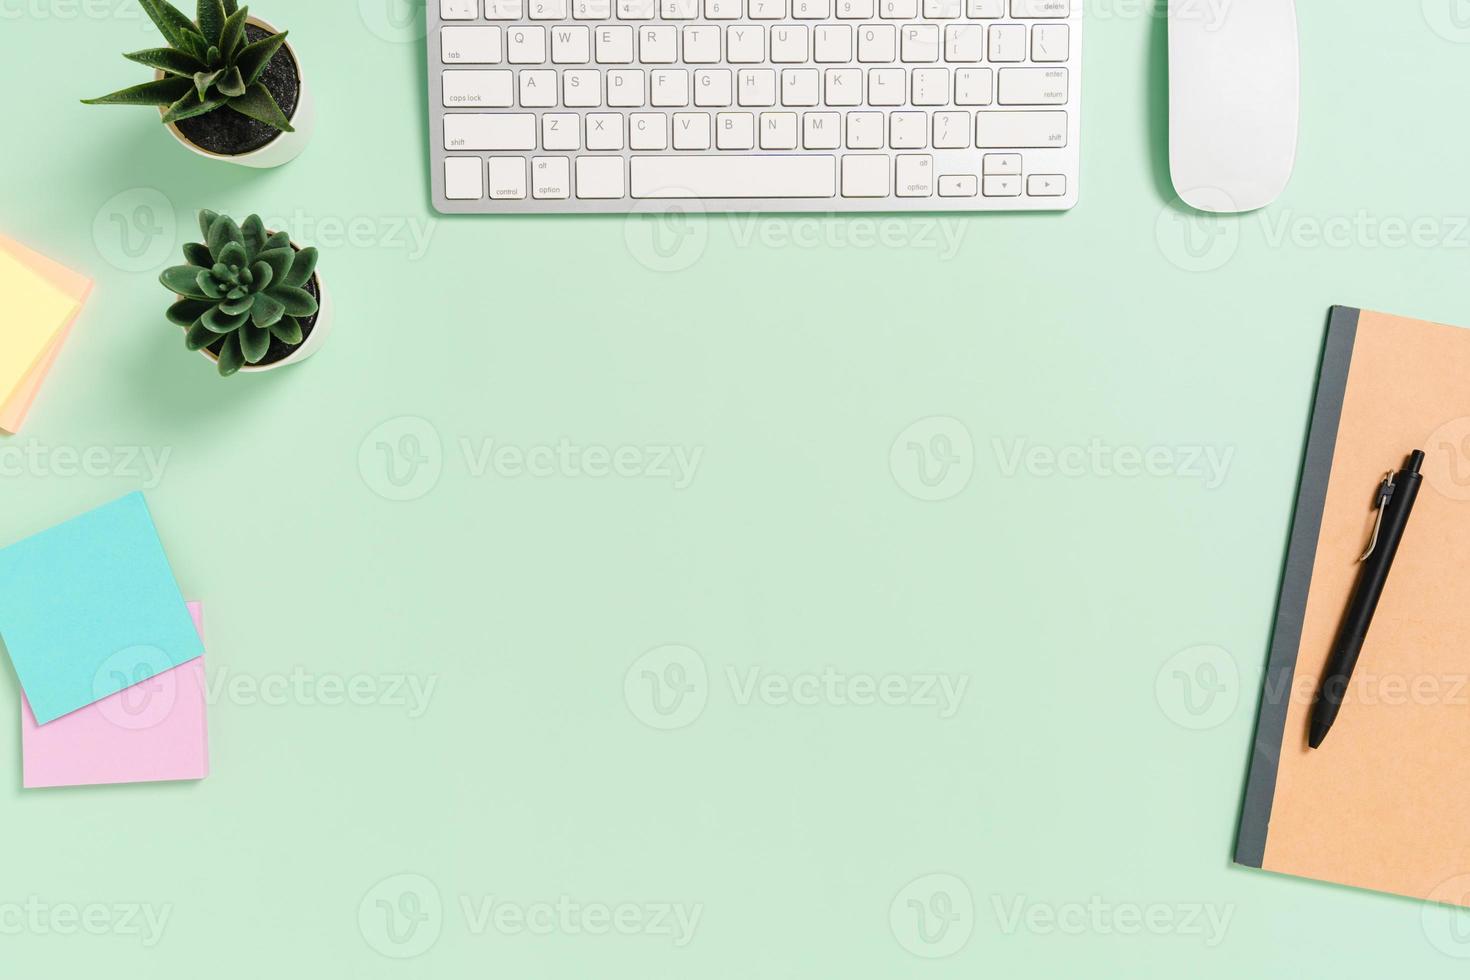 minimale werkruimte - creatieve platliggende foto van werkruimtebureau. bovenaanzicht bureau met toetsenbord, muis en boek op pastel groene kleur achtergrond. bovenaanzicht met kopieerruimte, platliggende fotografie.